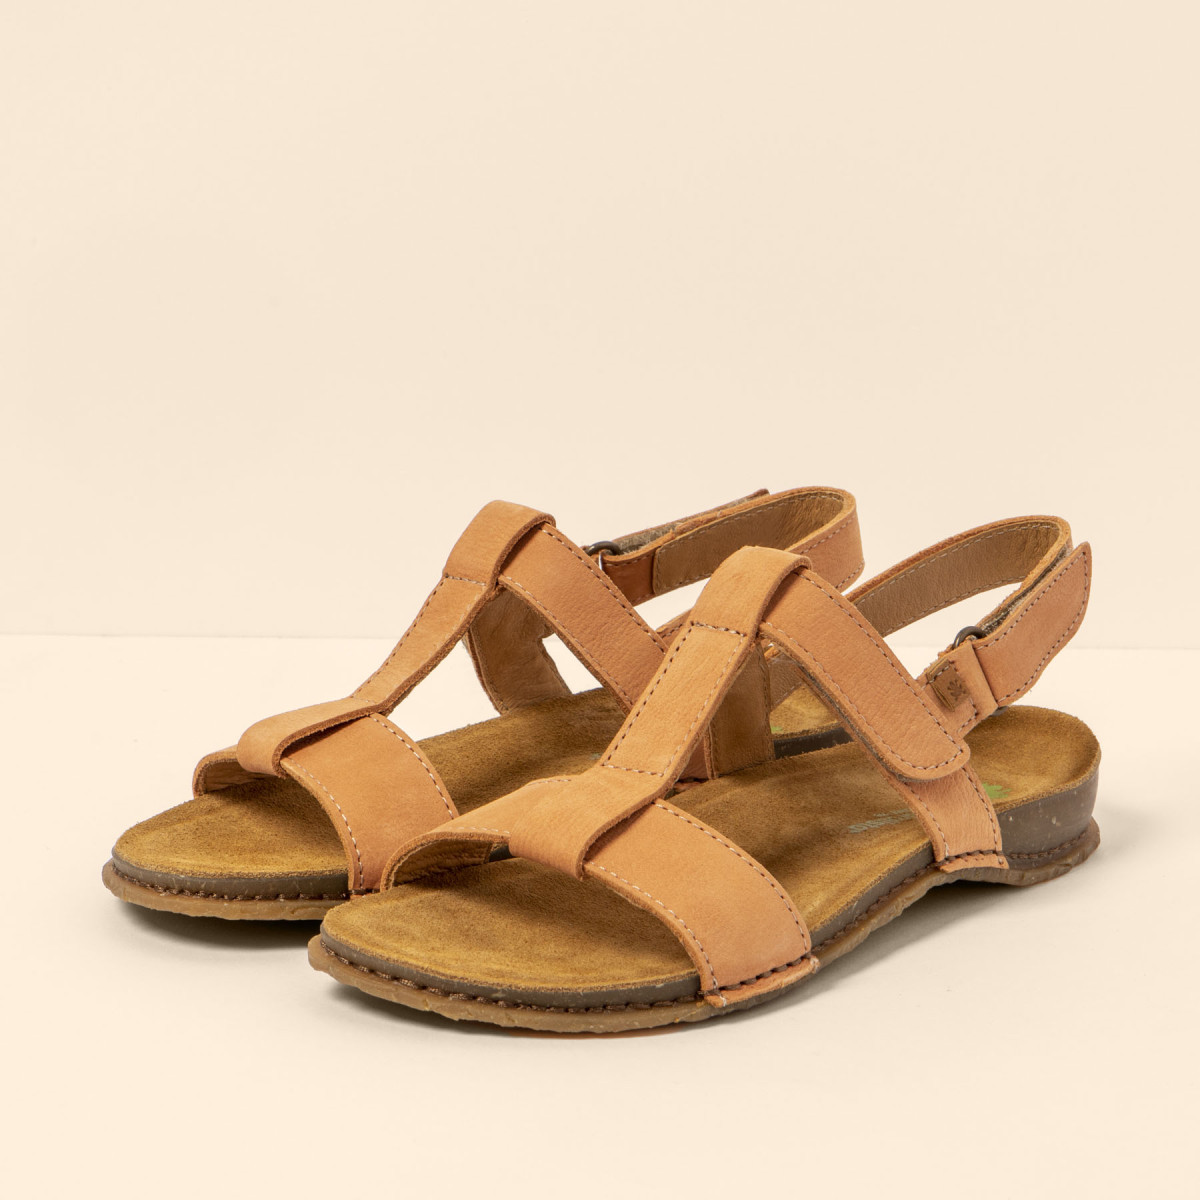 Sandales confortables plates en cuir semelle ergonomique - Jaune - El naturalista